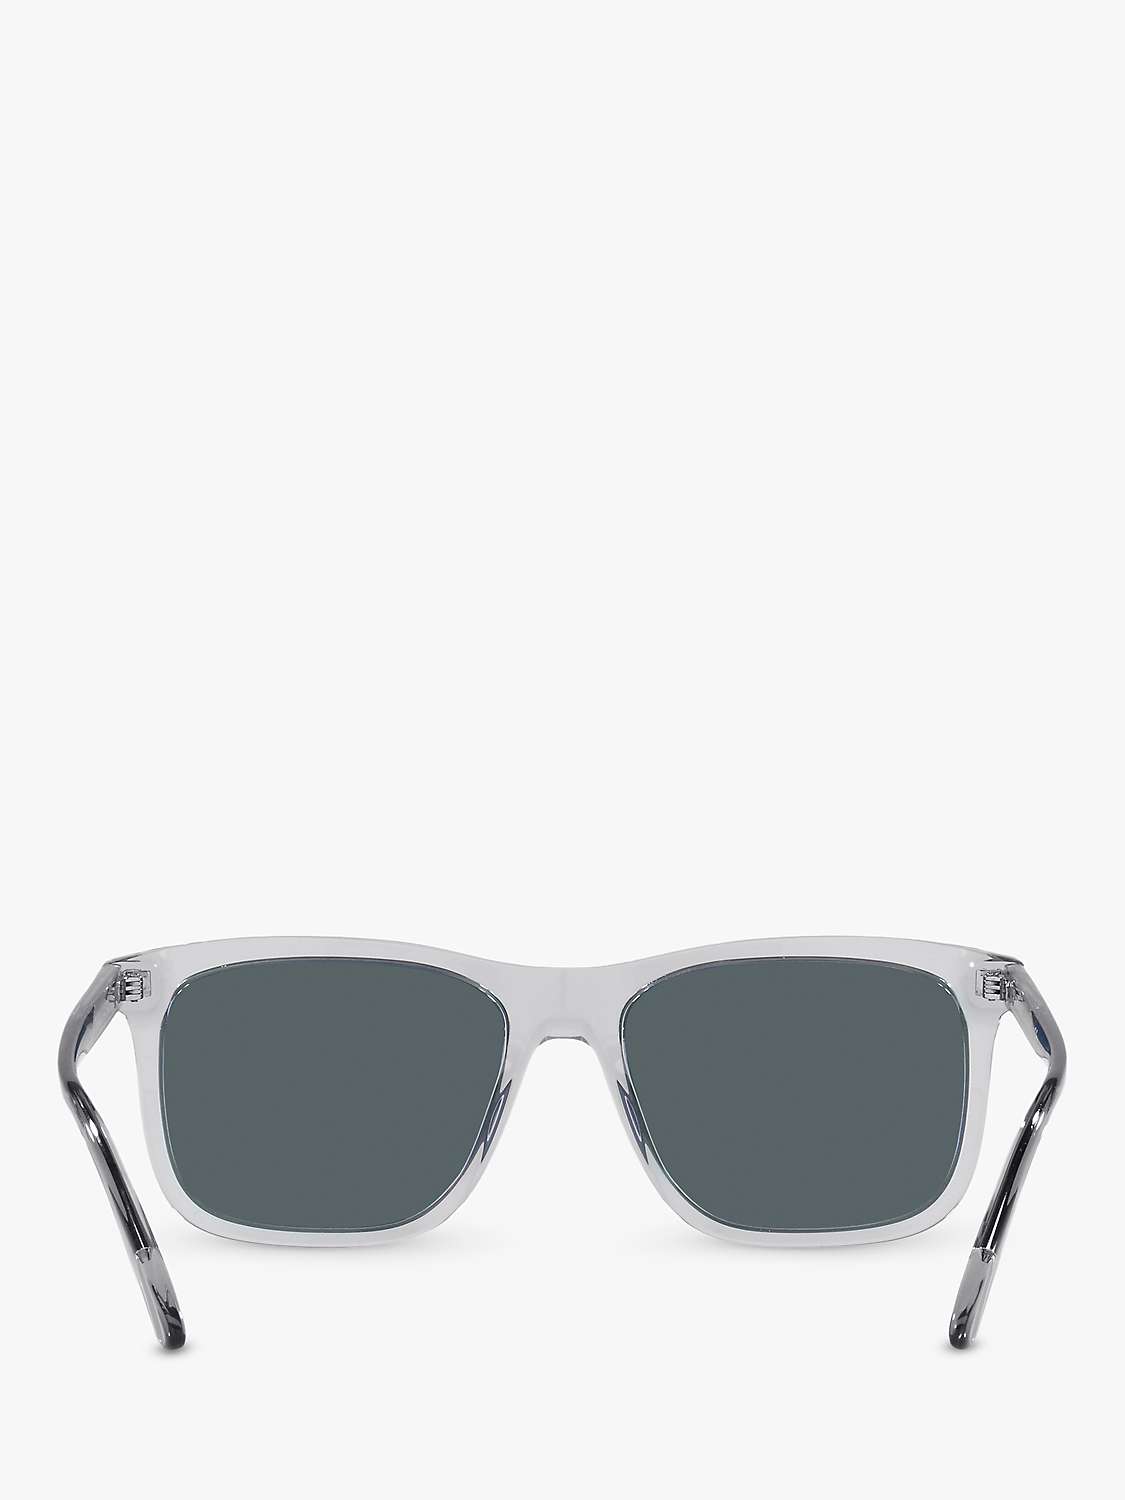 Prada PR 18WS Men's Rectangular Sunglasses, Clear Grey/Grey at John ...